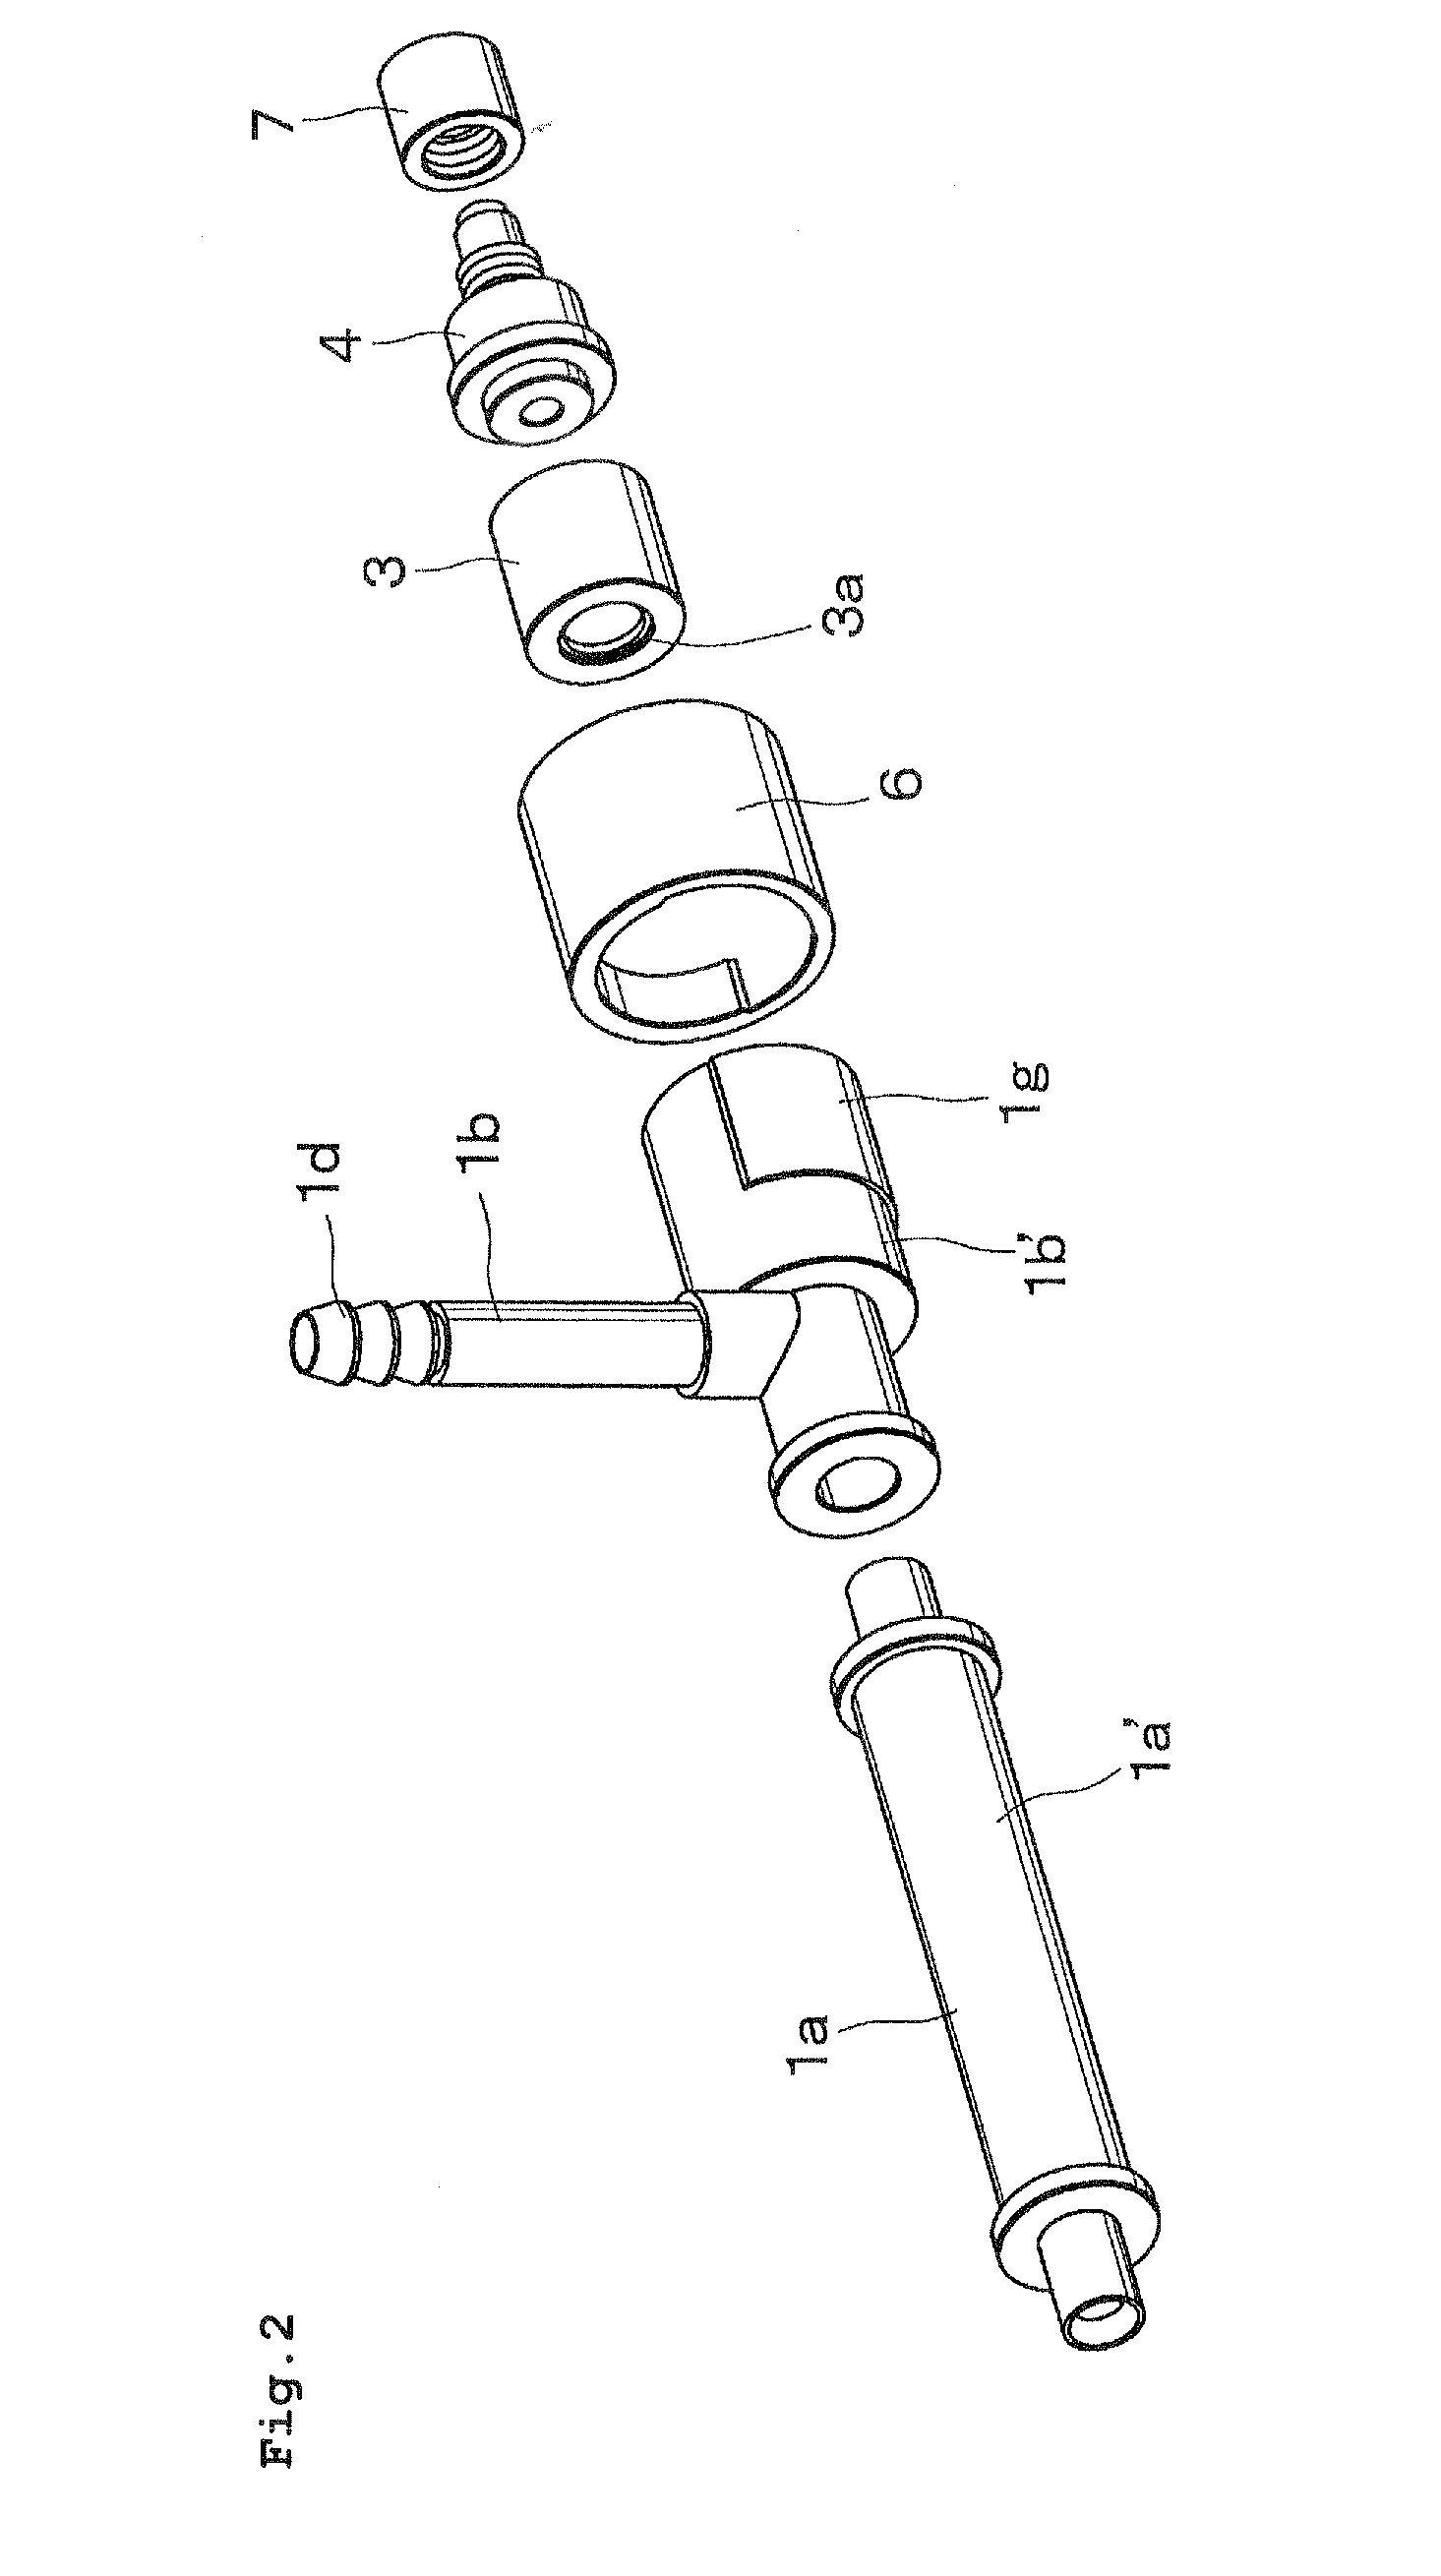 Ultrasonic type flowmeter apparatus and method of using the same